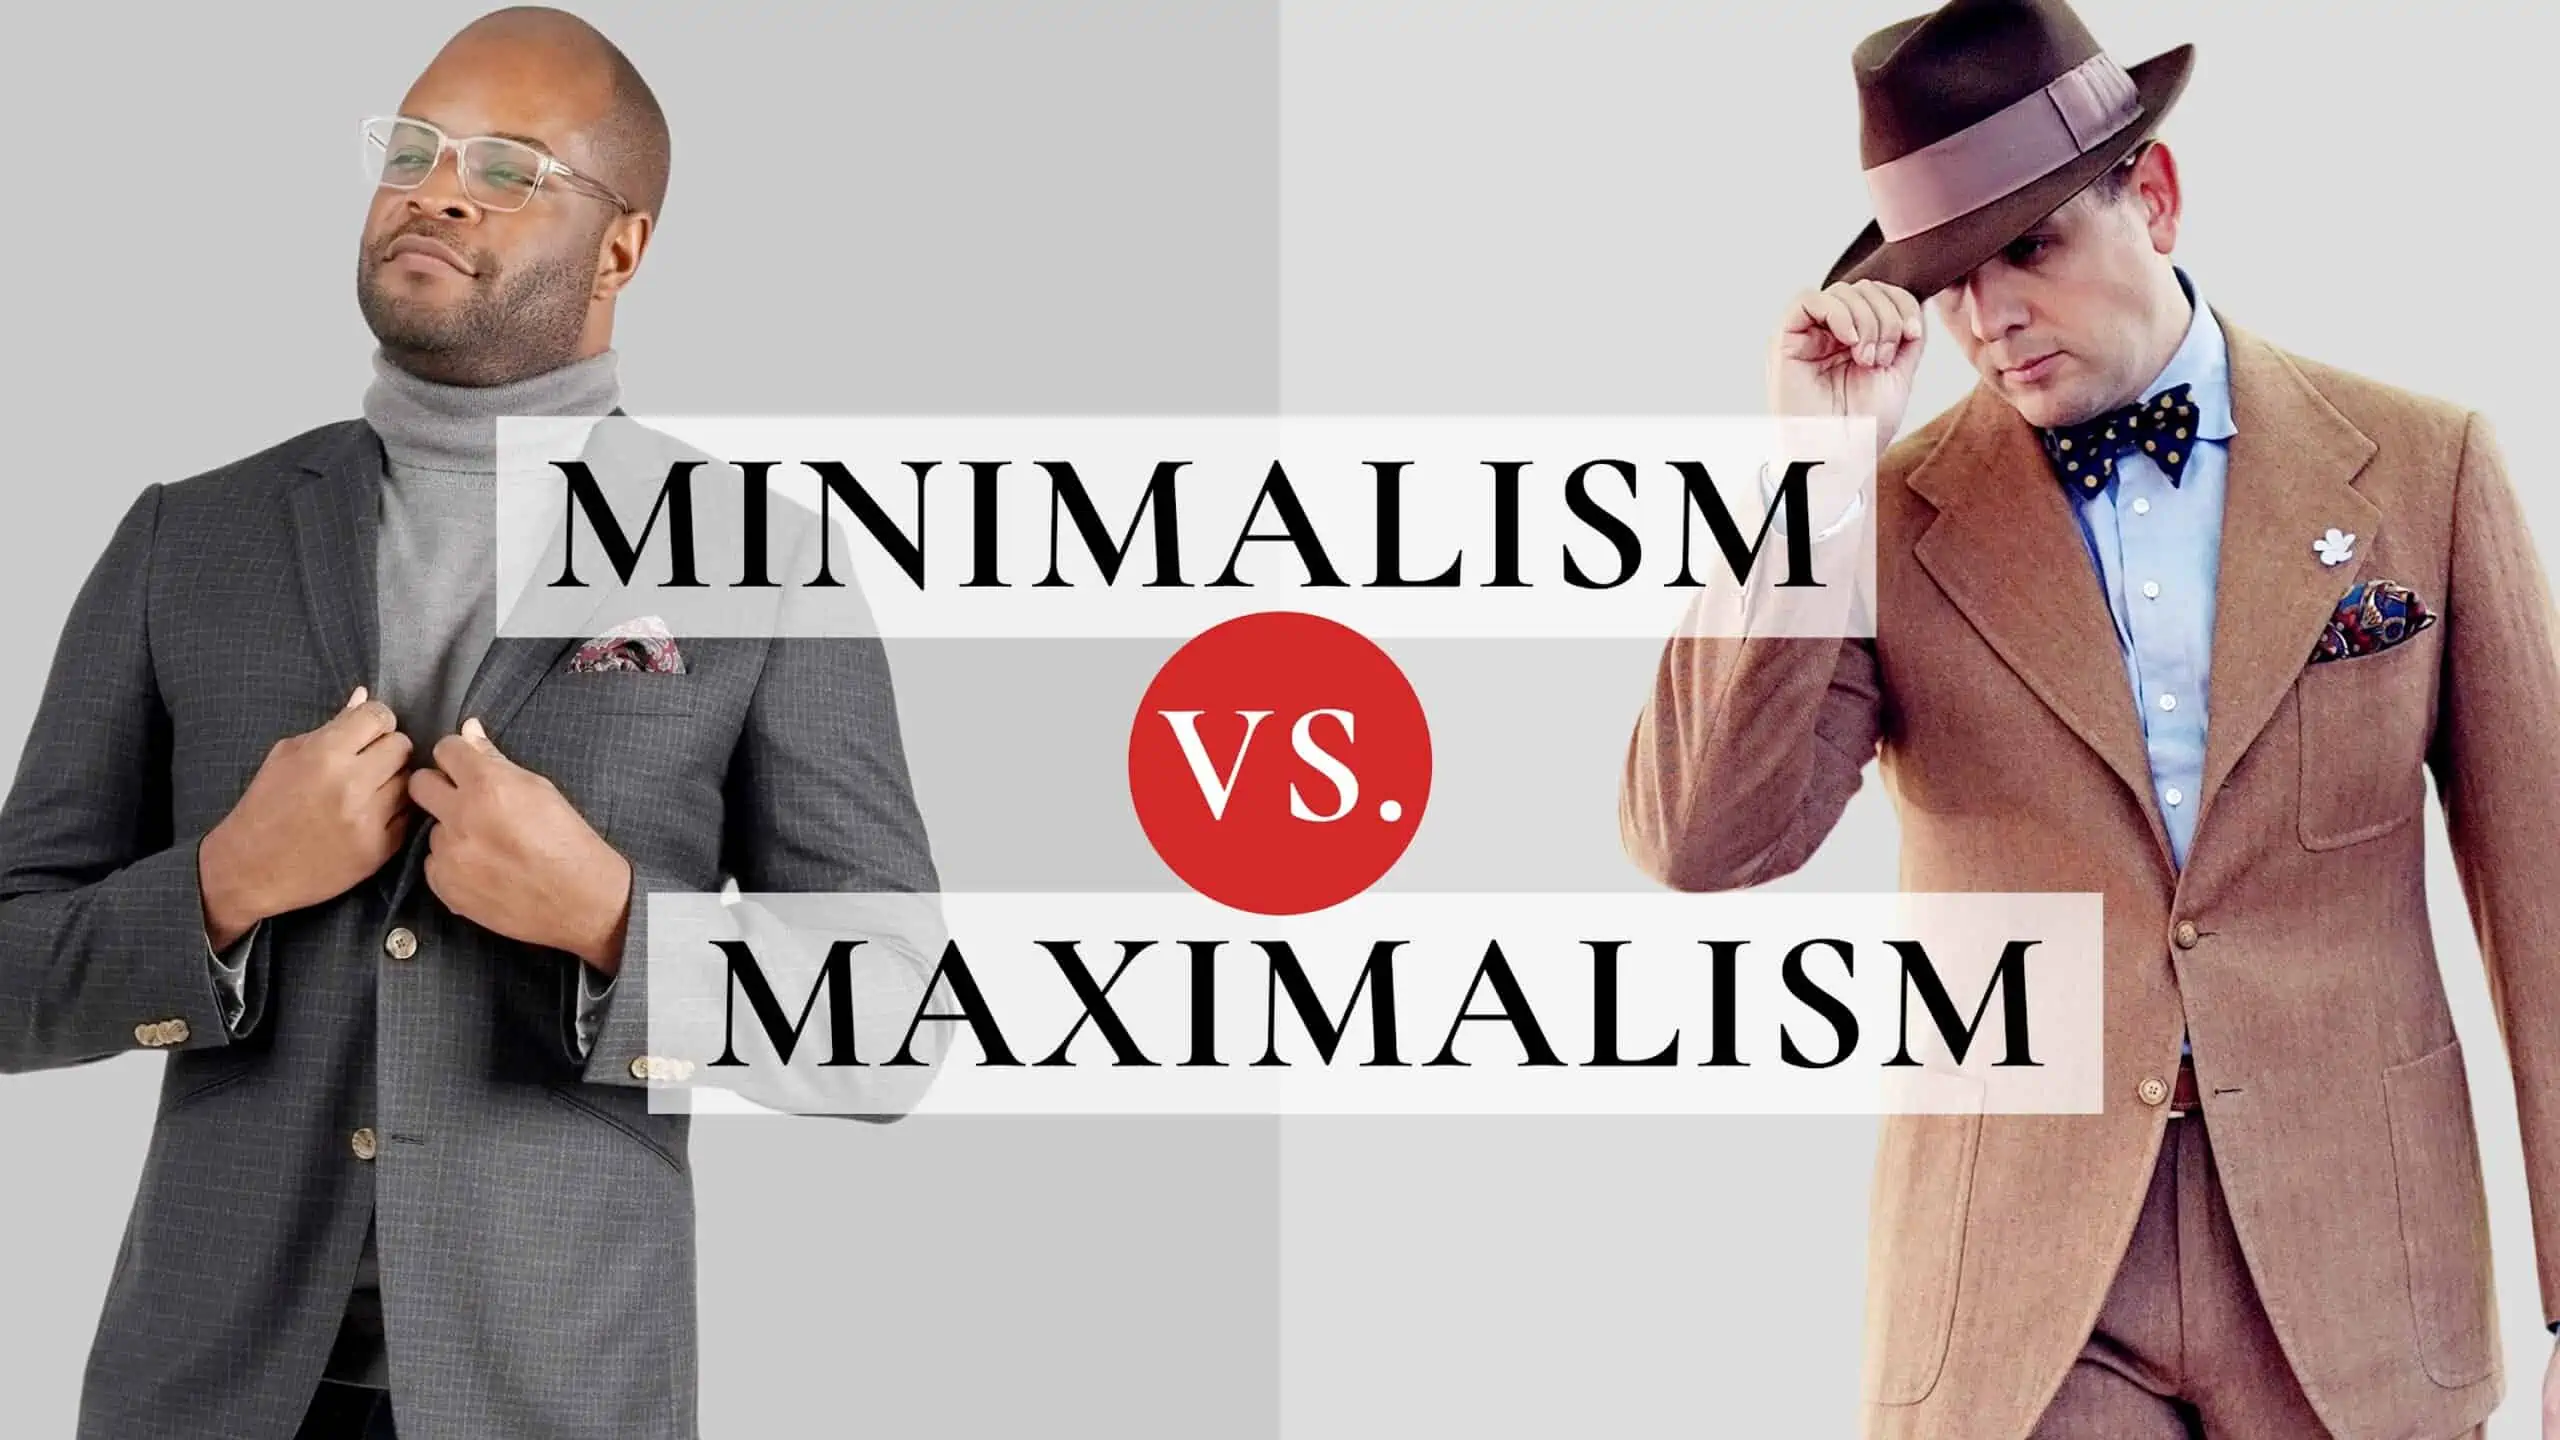 Minimalism vs. Maximalism 3840x2160 scaled